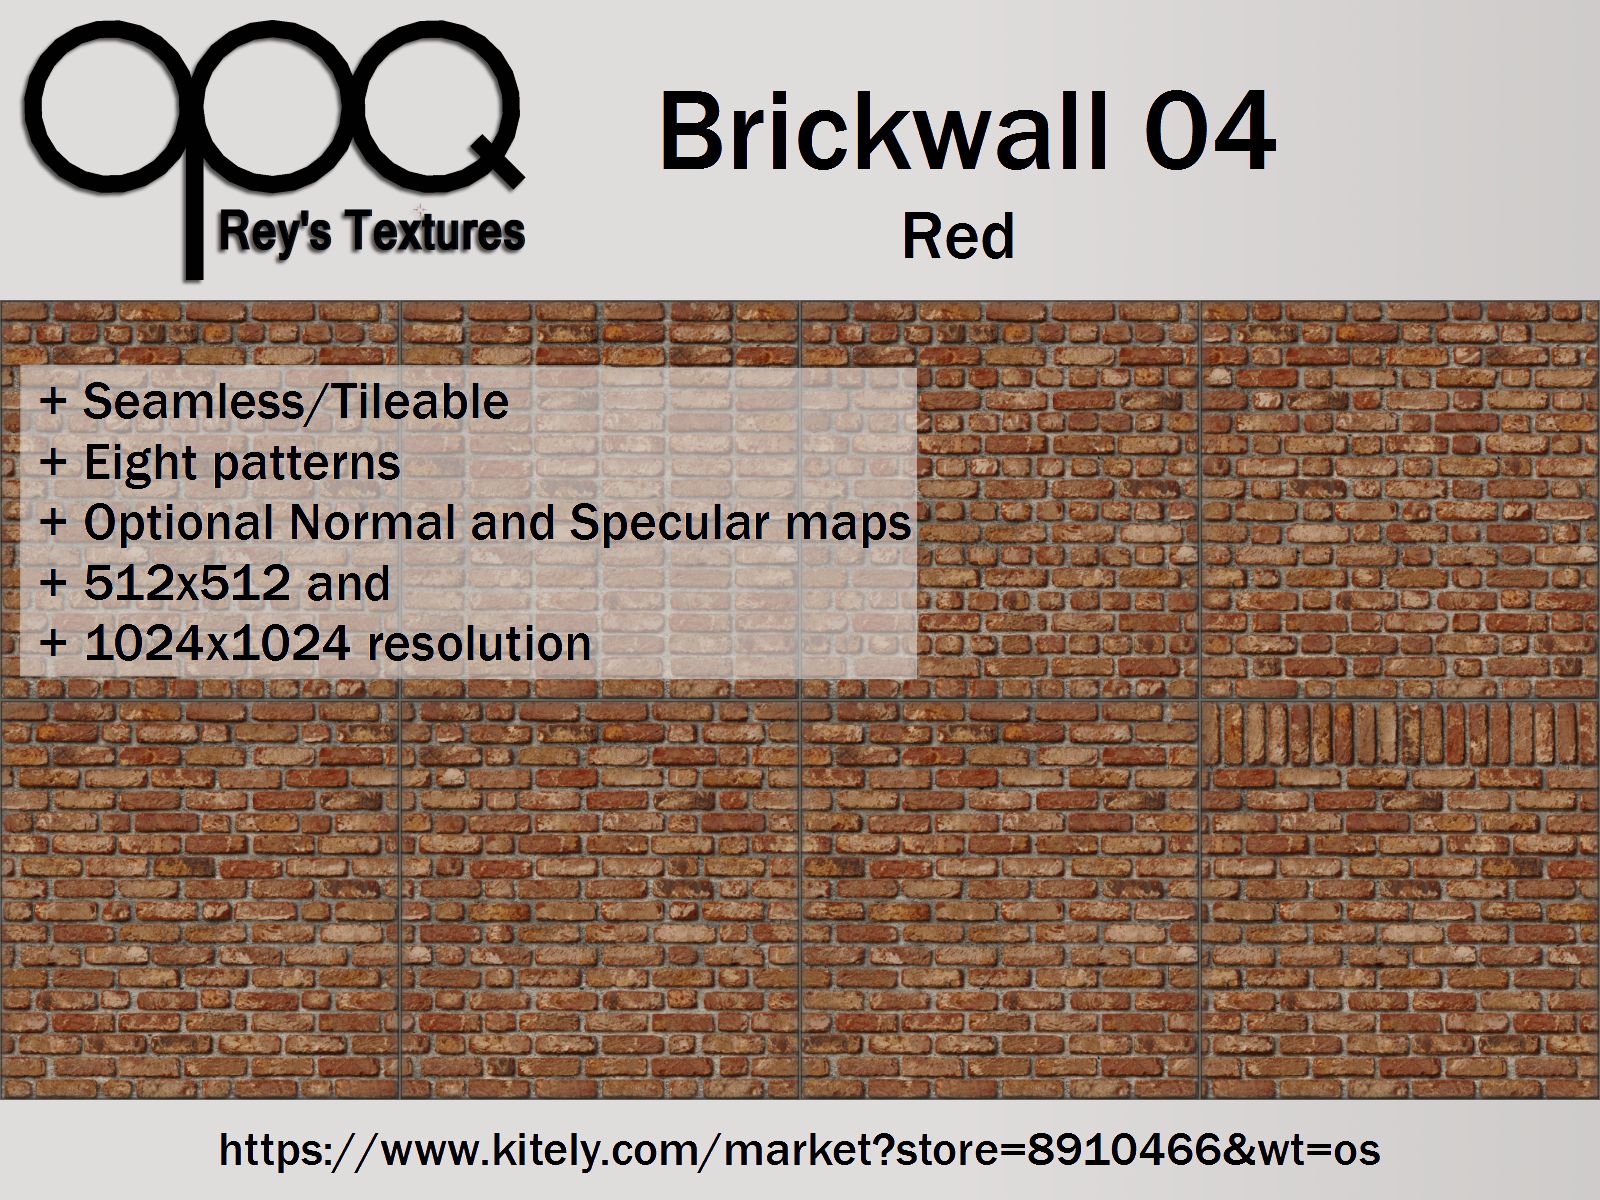 Rey's Brickwall 04 Red Poster Kitely.jpg